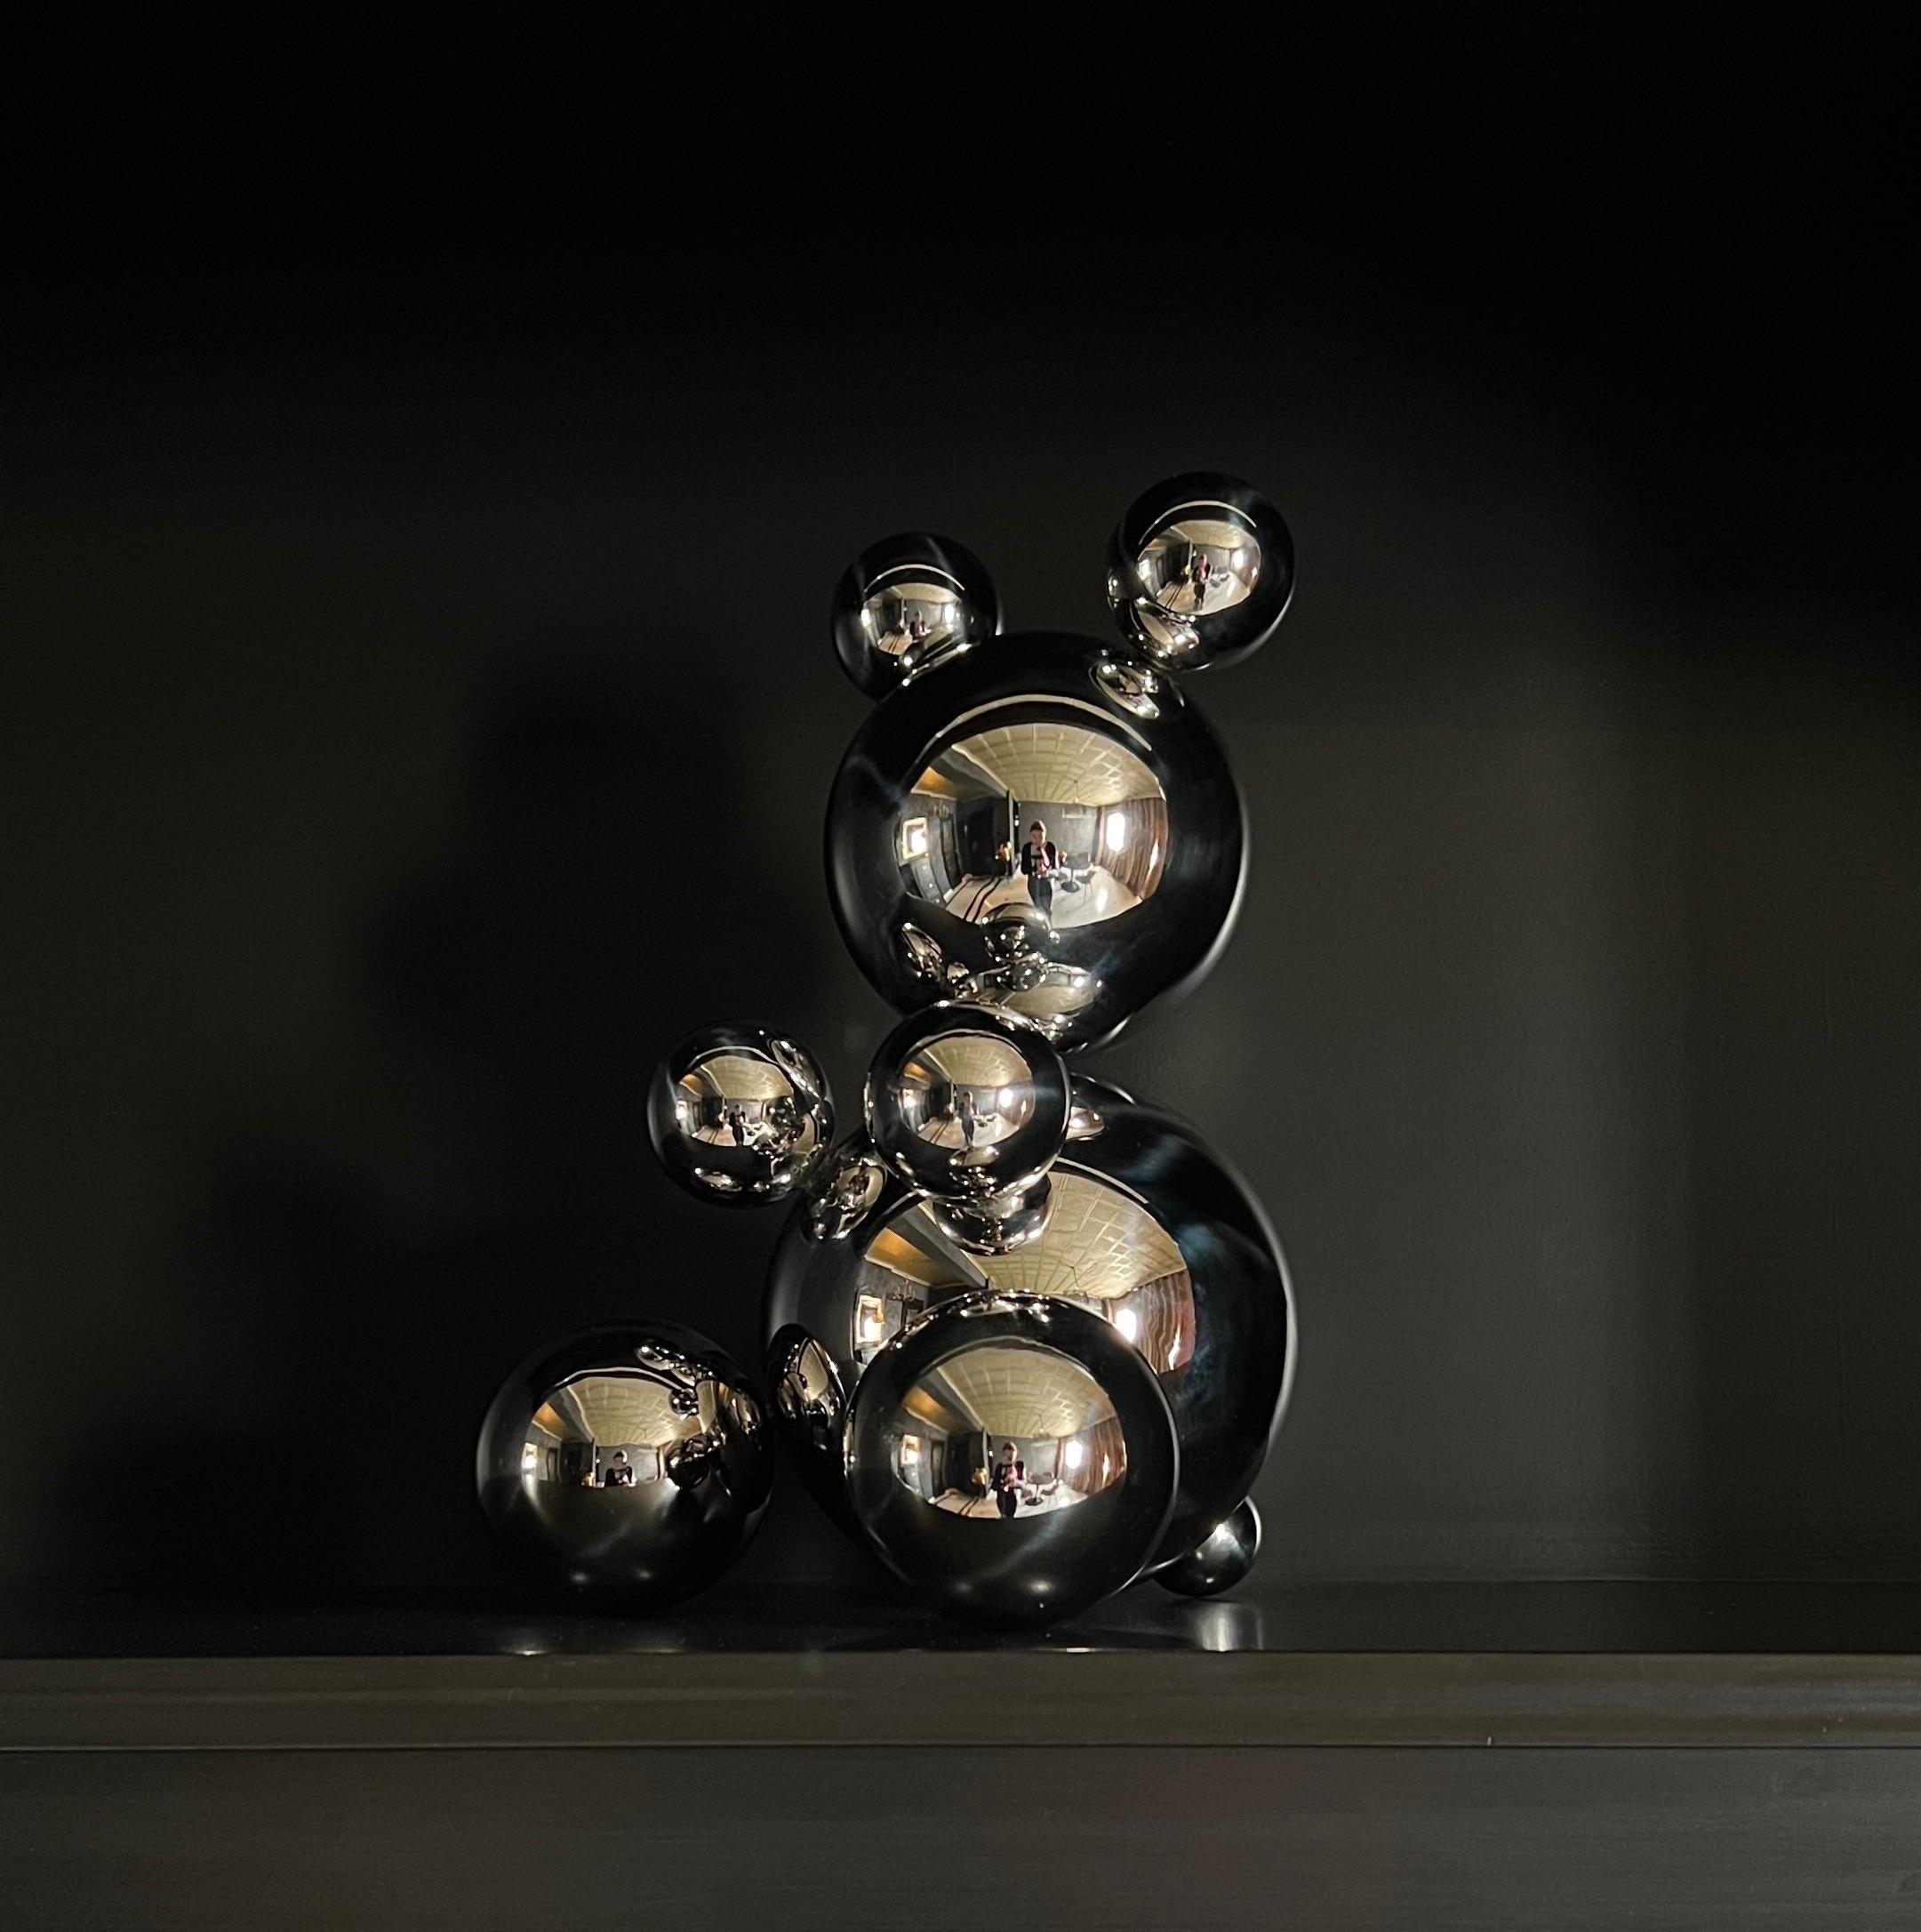 Middle Stainless Steel Bear 'Thomas' Sculpture Minimalistic Animal 5